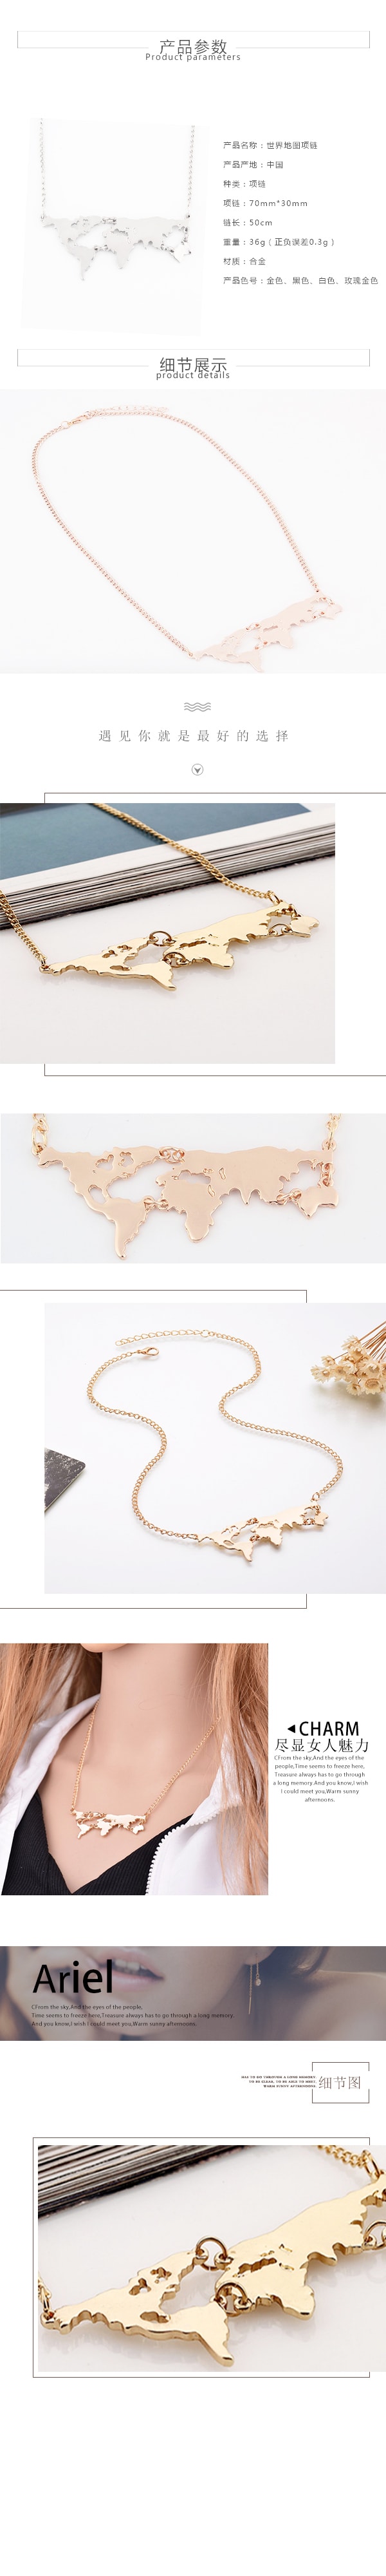 Globe map necklace